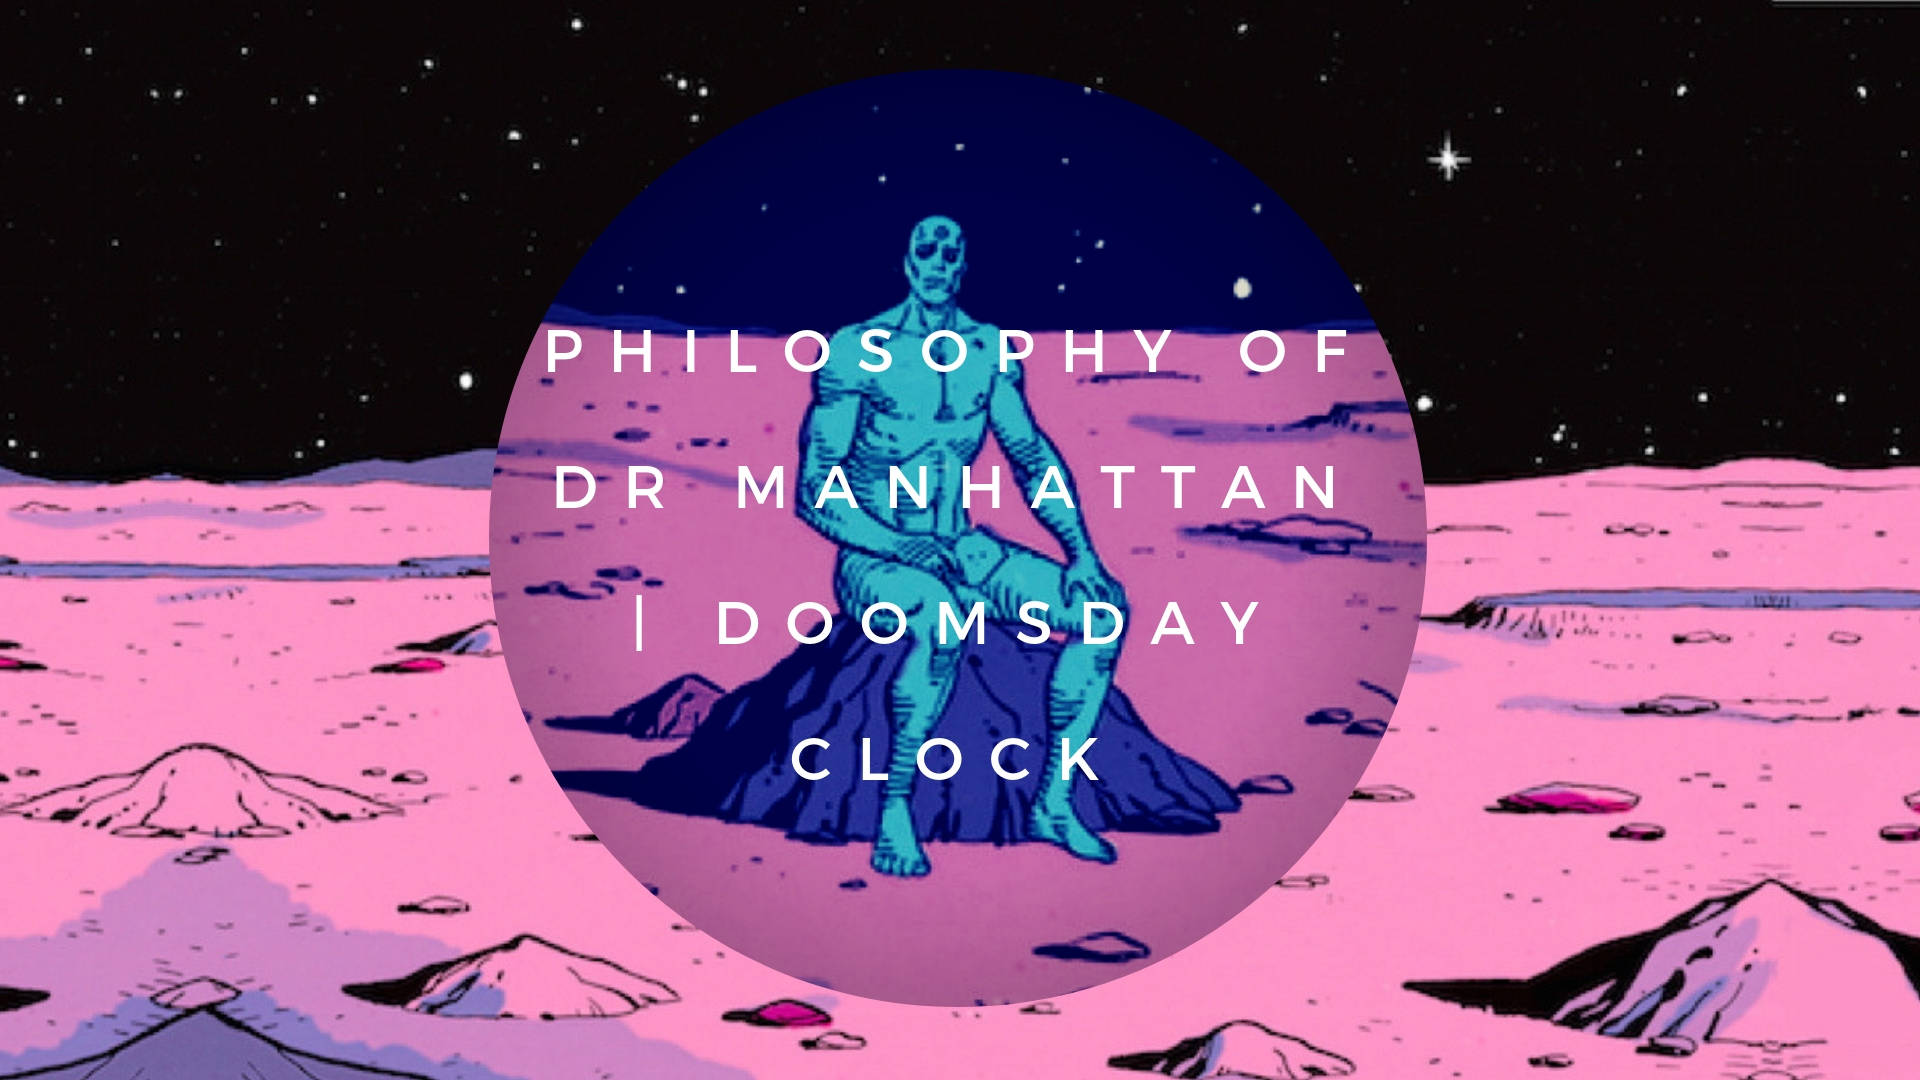 Doktormanhattans Filosofi Doomsday Clock. Wallpaper